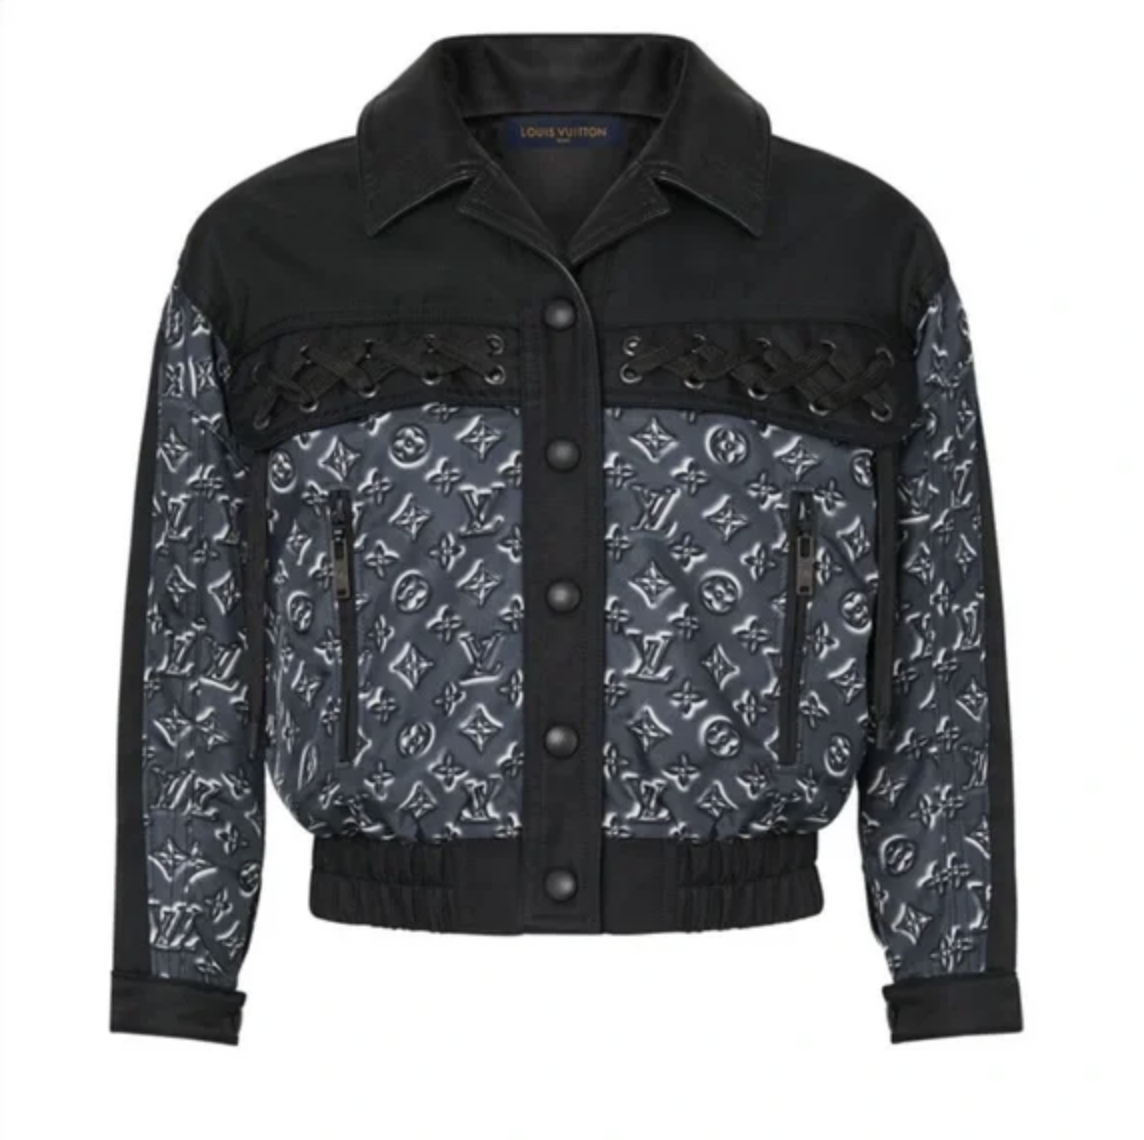 Dorit Kemsley's Black and Blue Cropped Logo Jacket